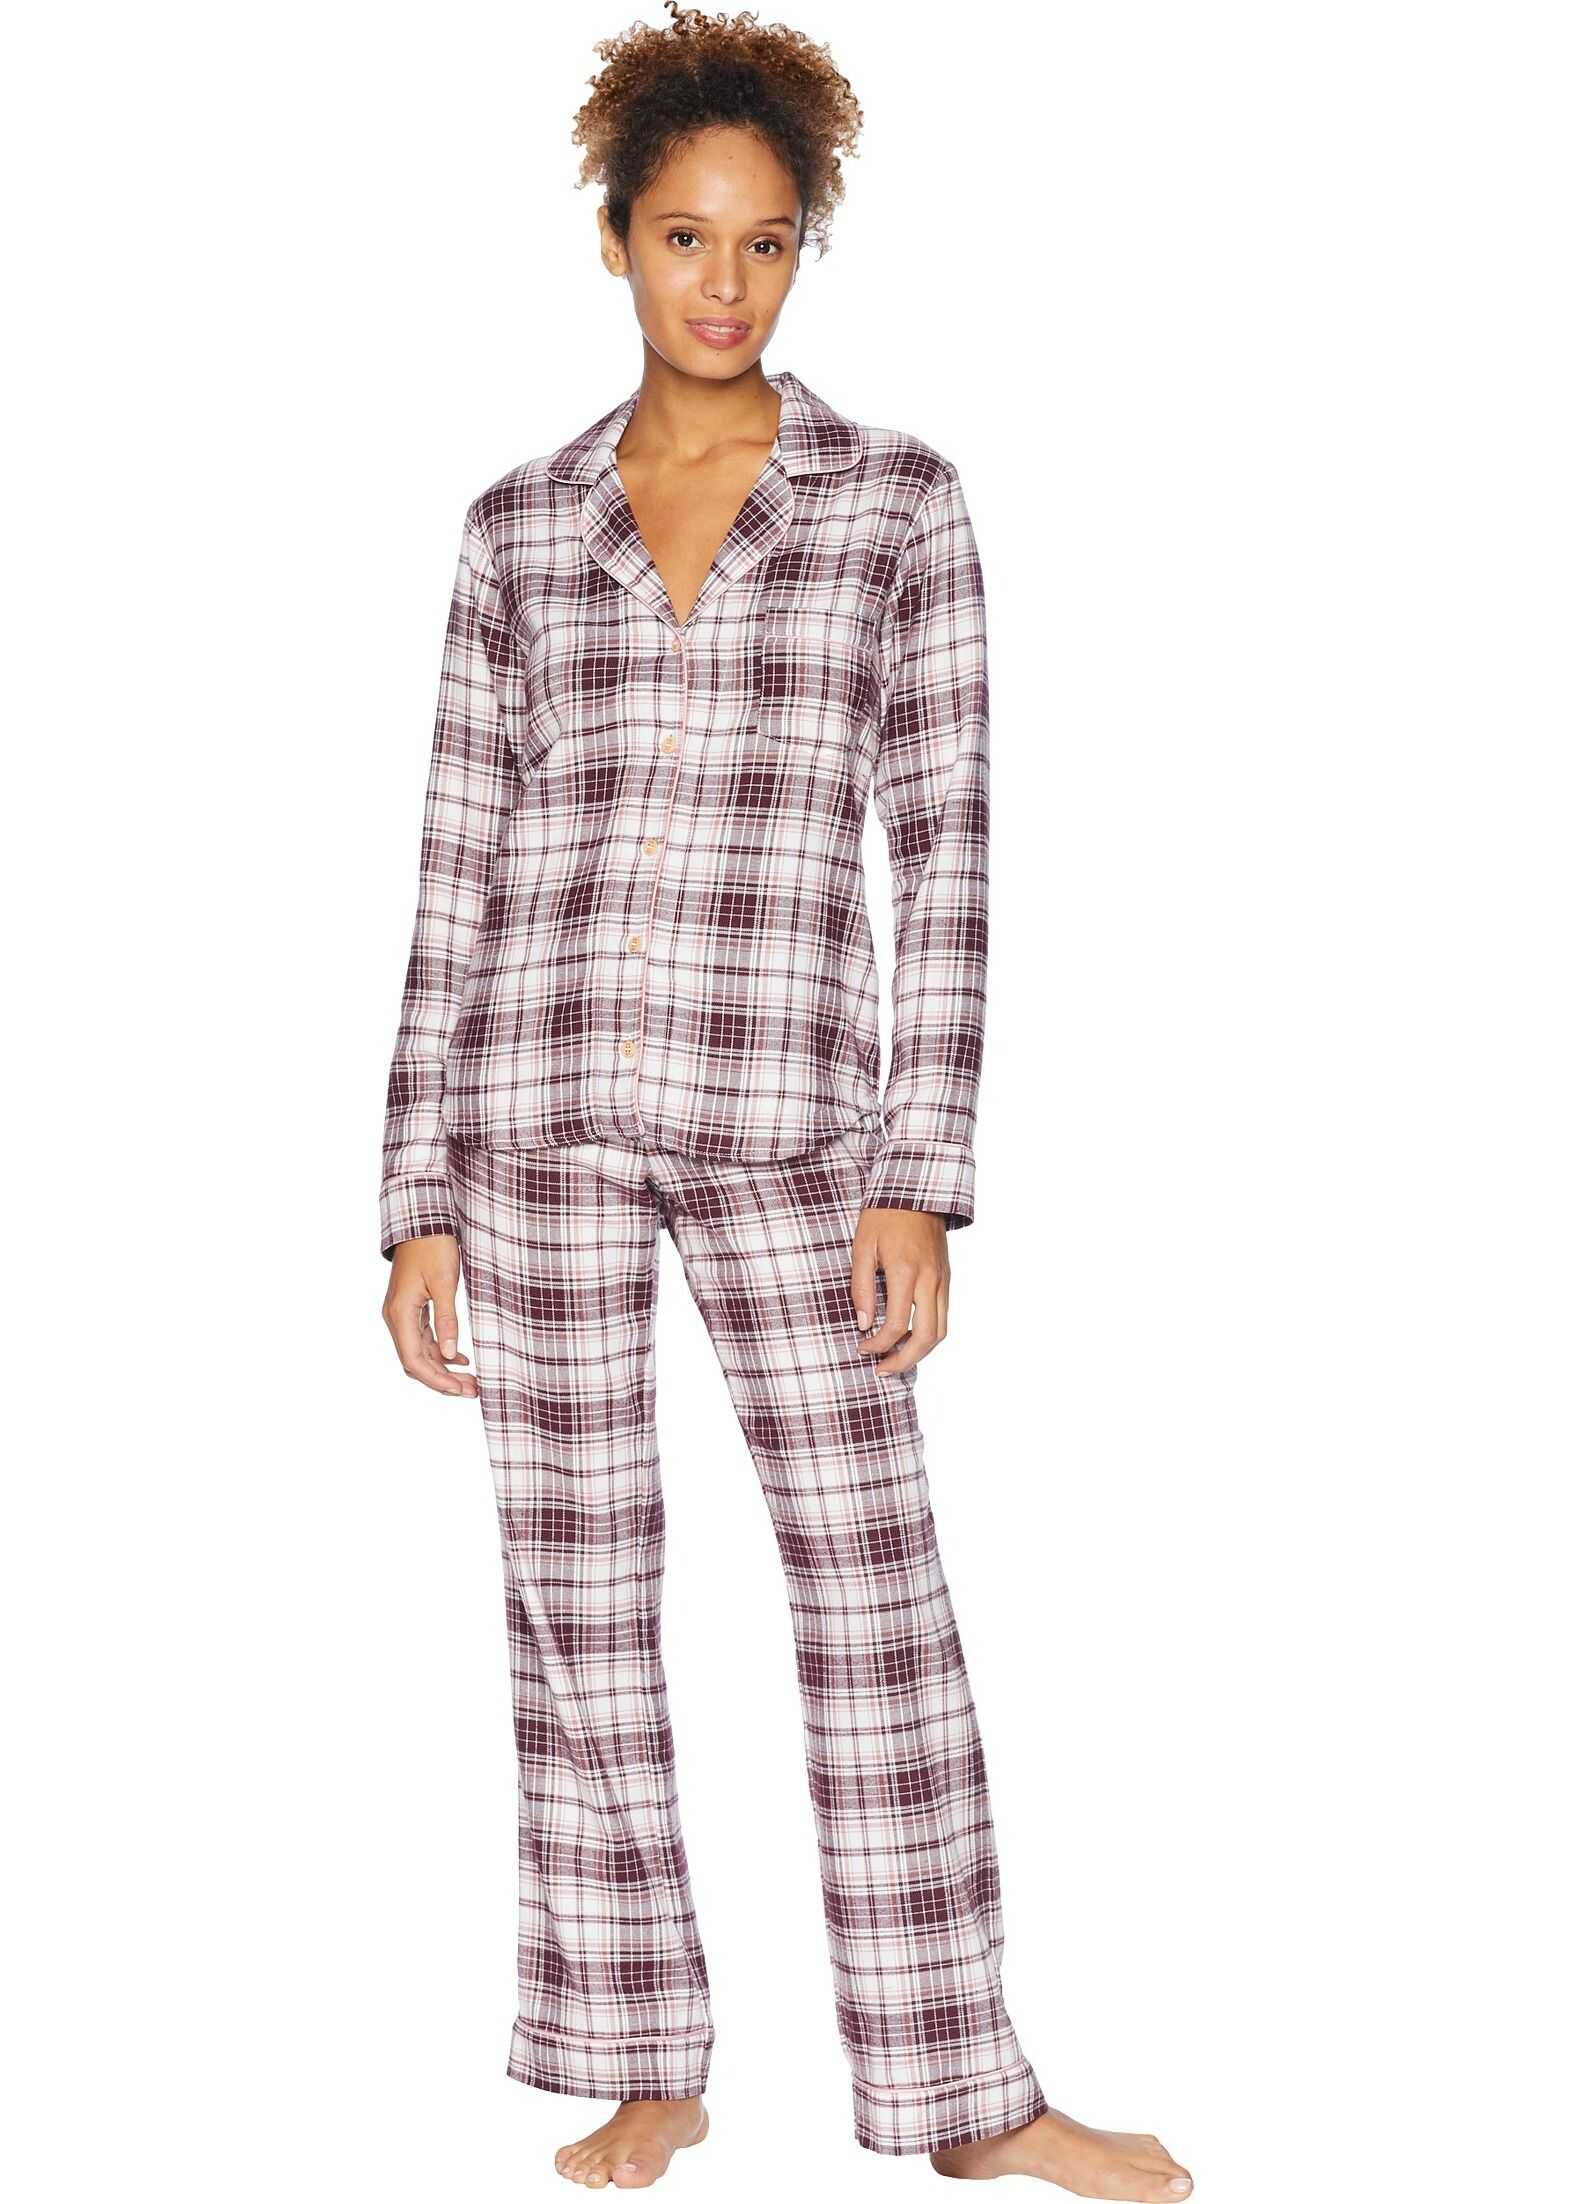 UGG Raven Woven Sleepwear Set Flannel Gift Port Plaid